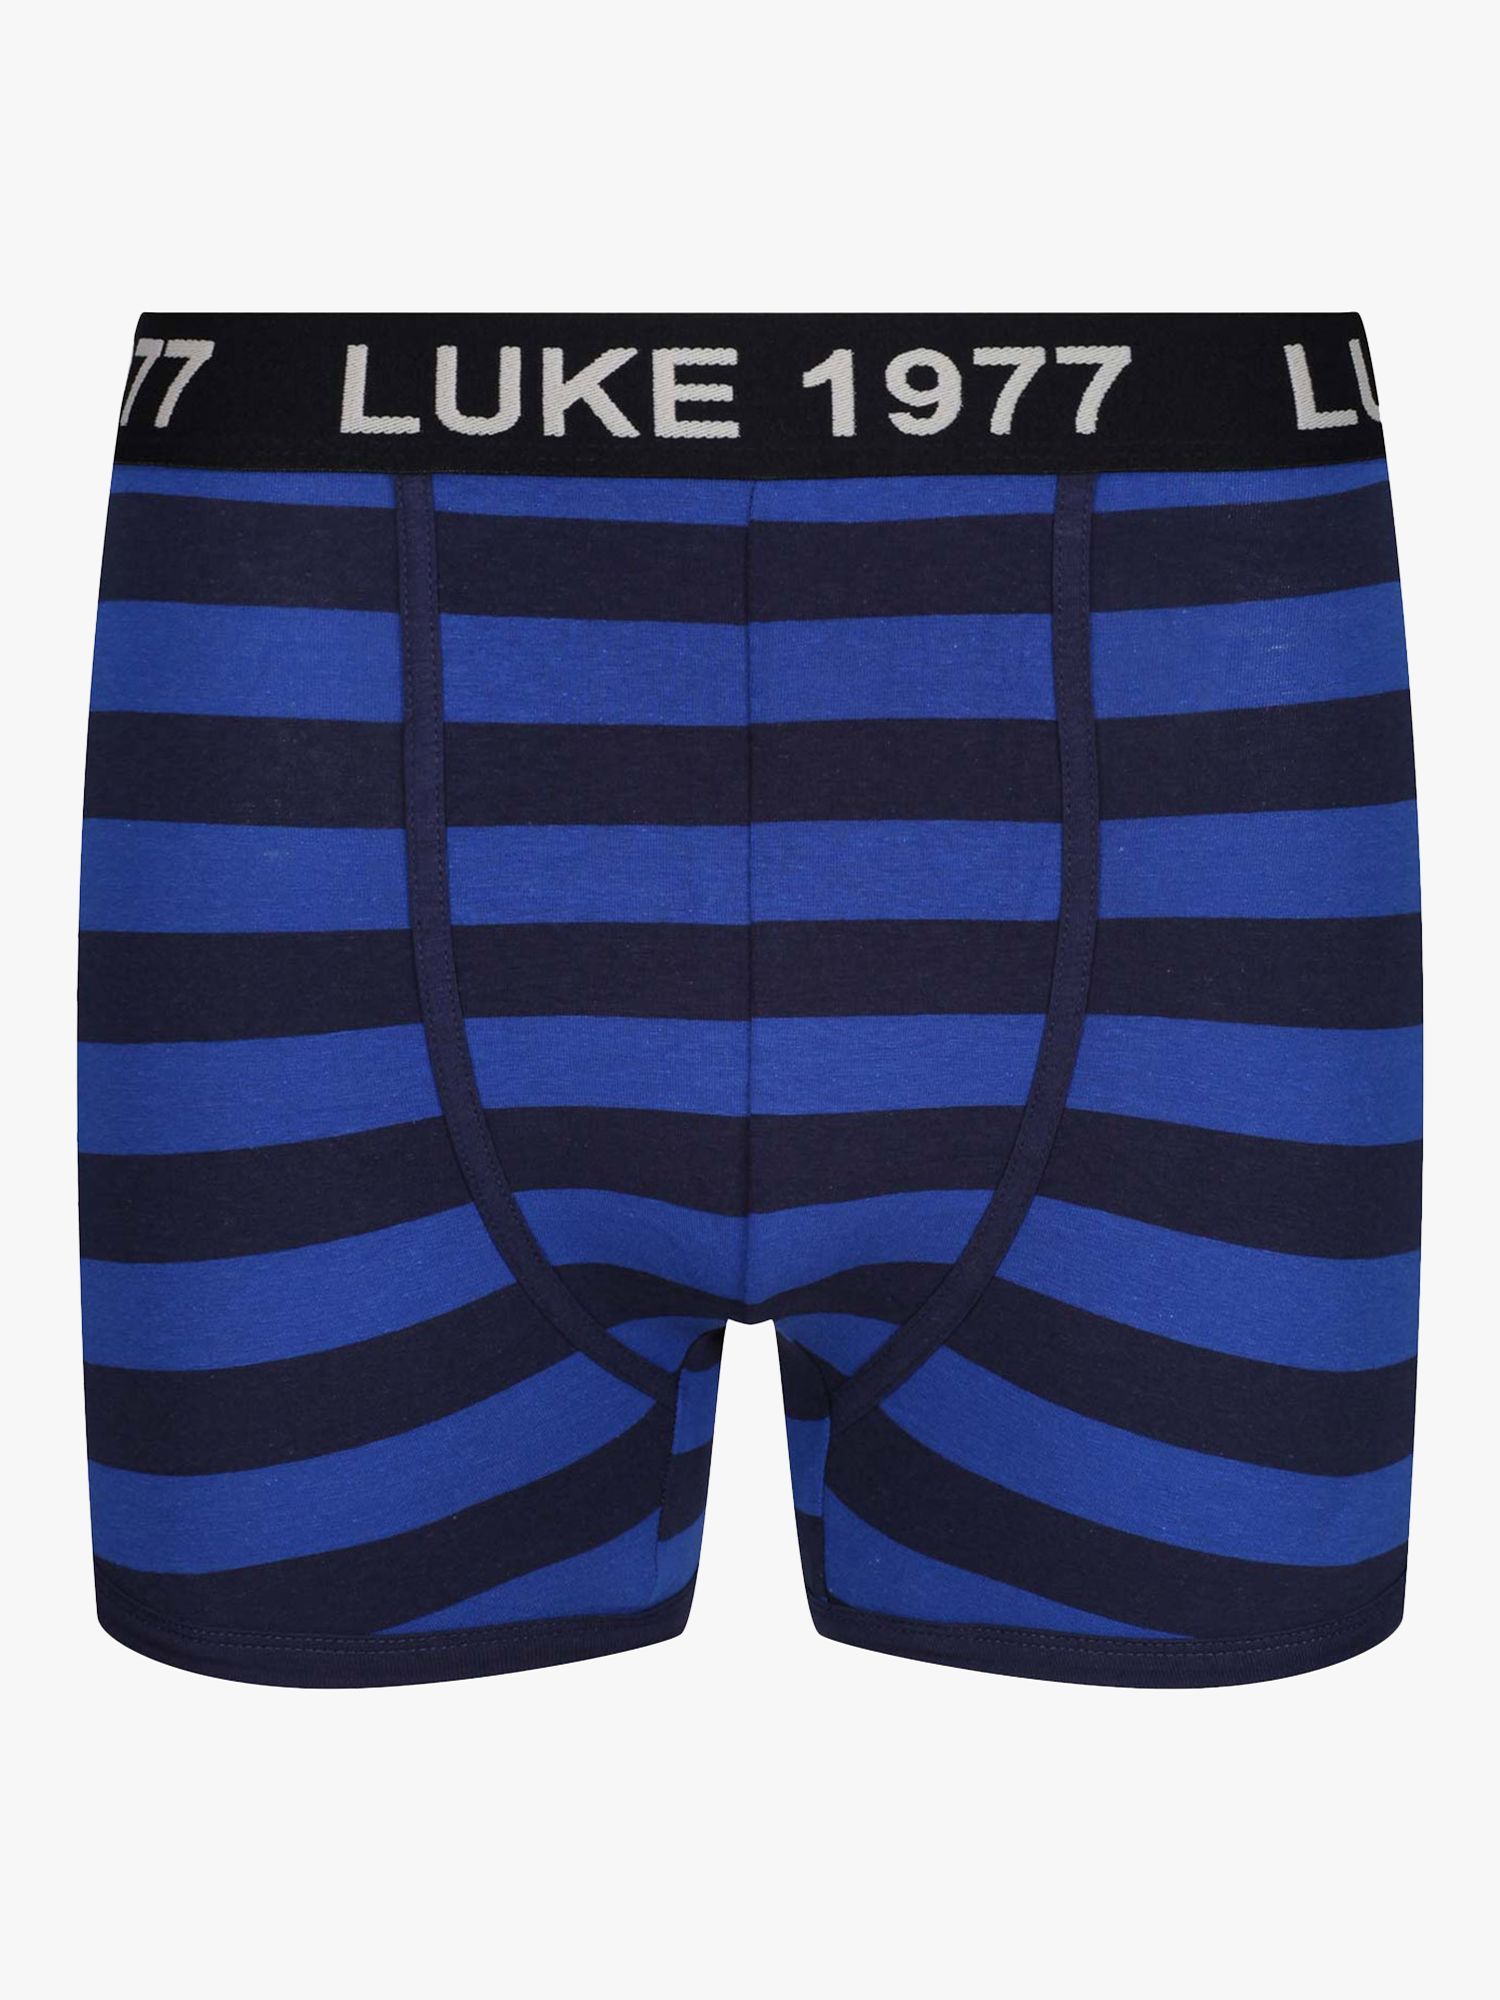 Buy LUKE 1977 Niter Striped Cotton Blend Boxers, Pack of 3 Online at johnlewis.com